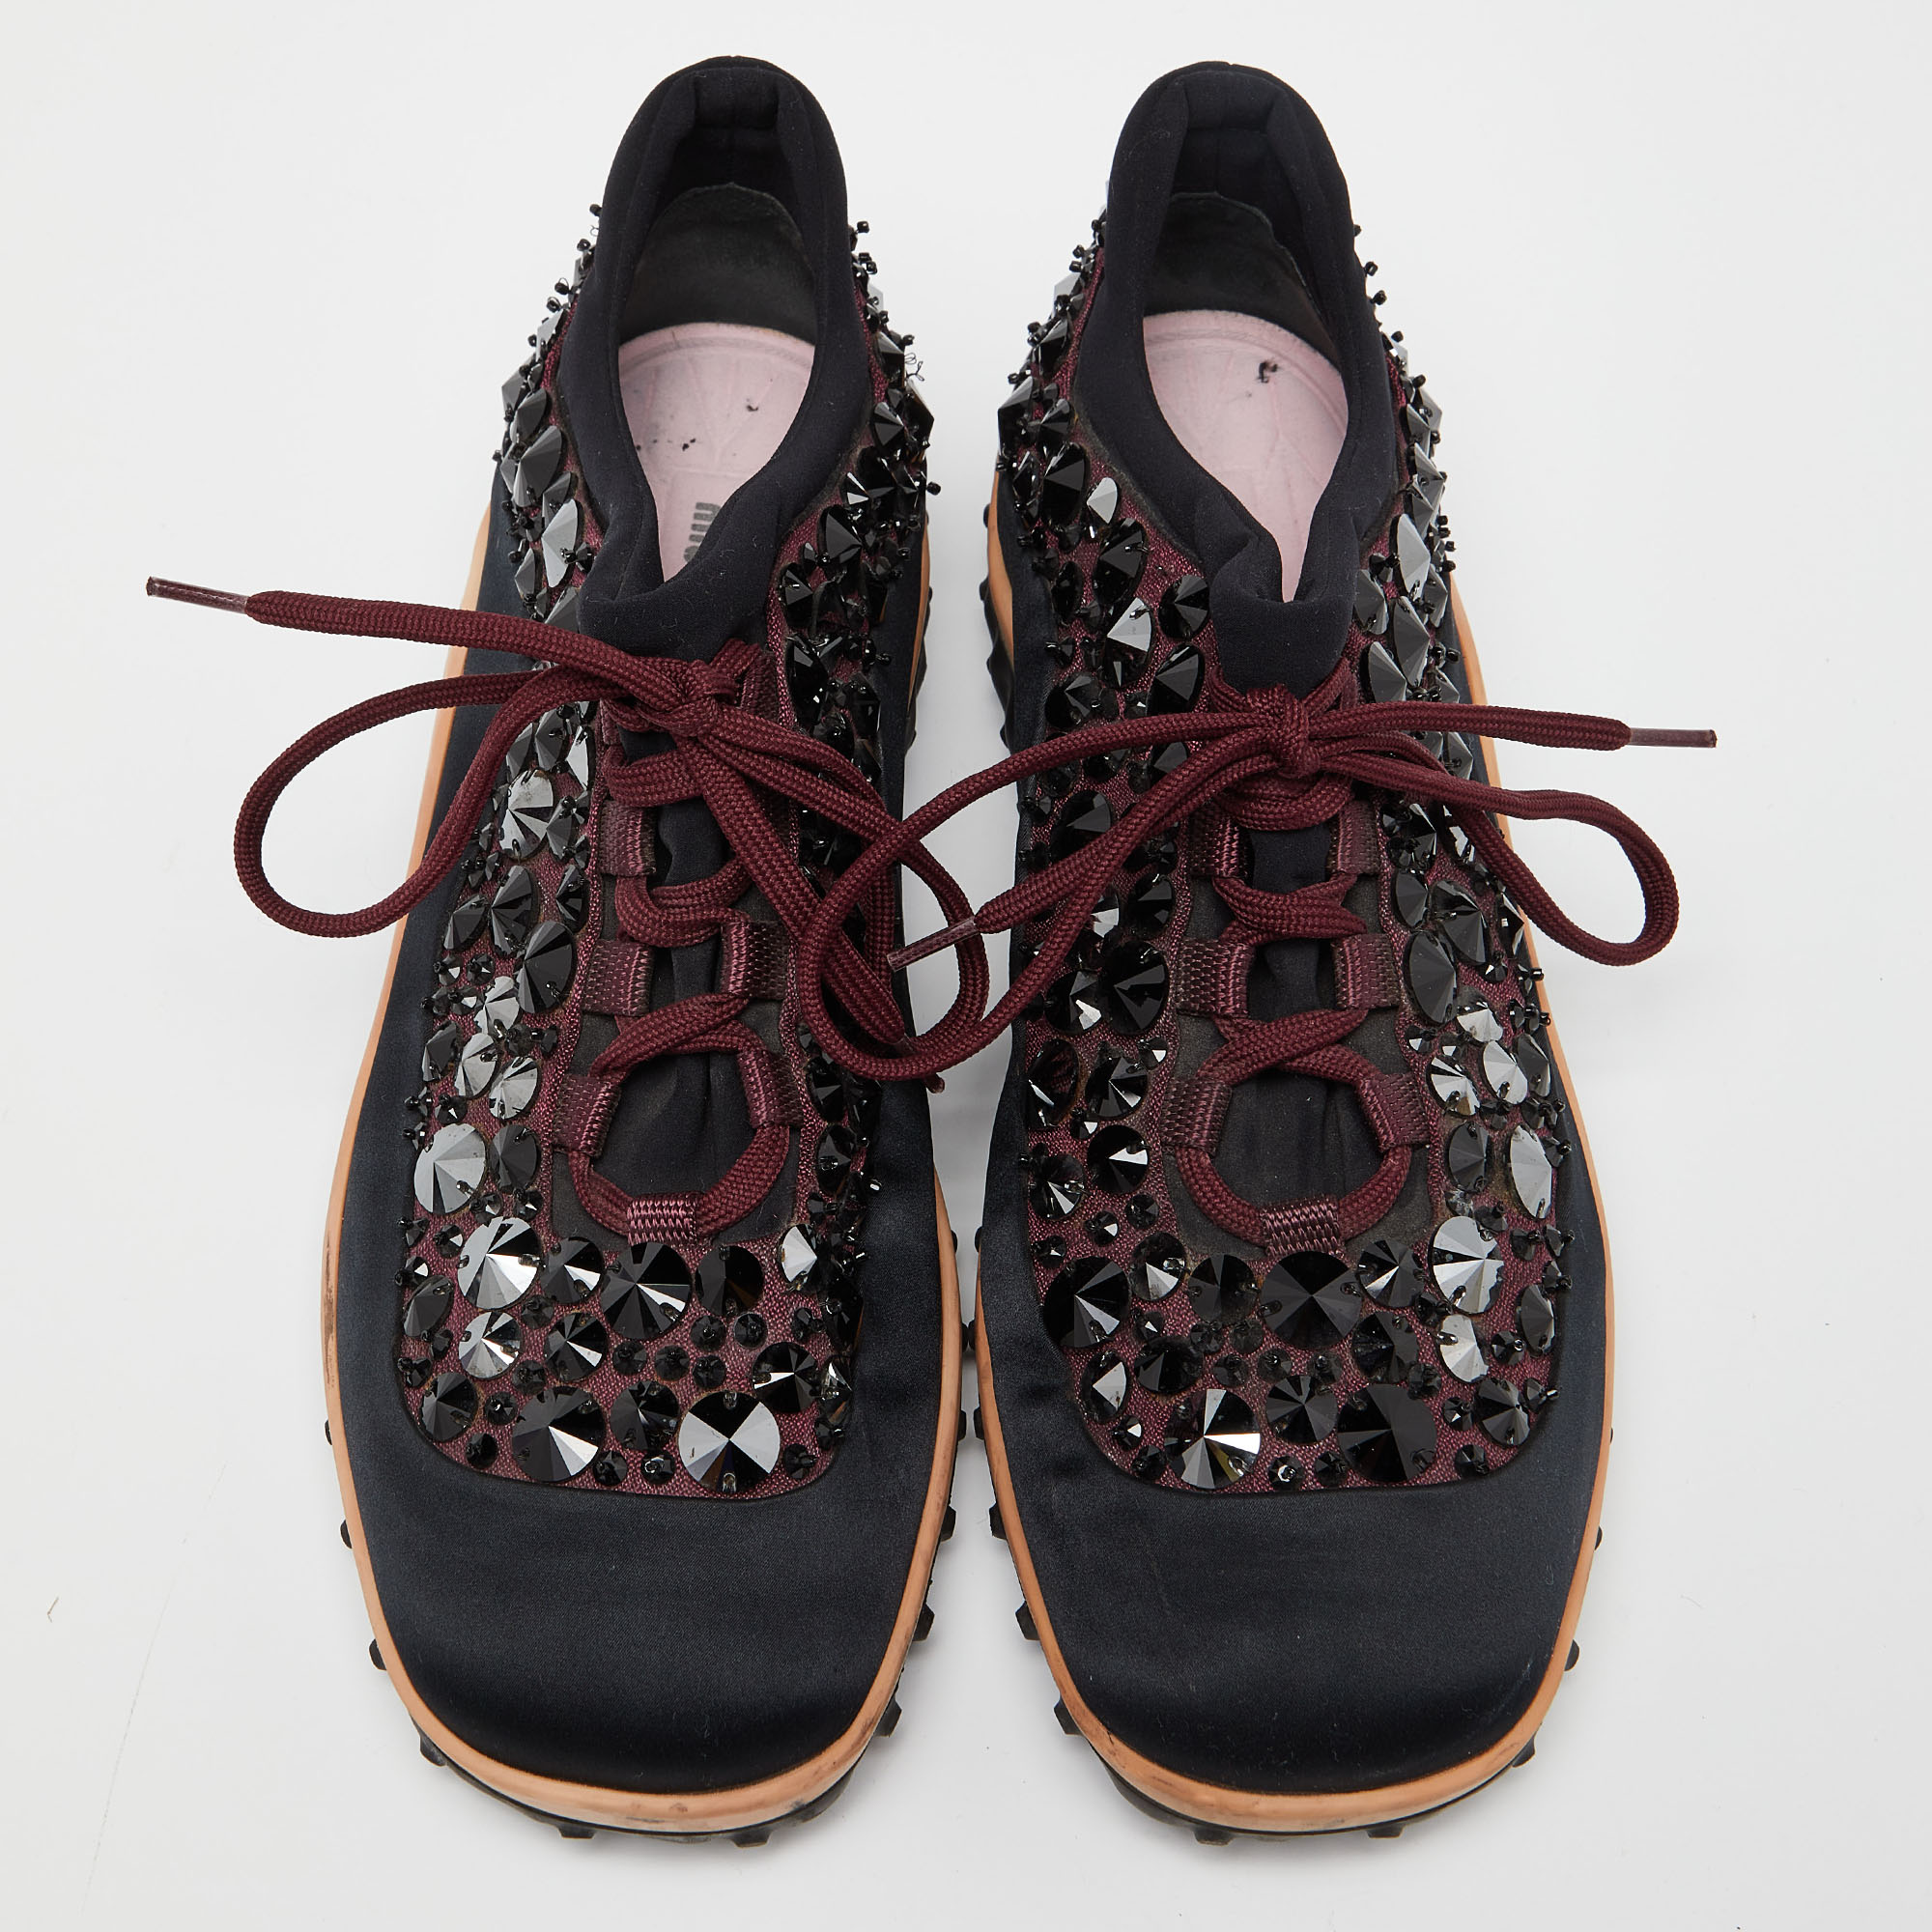 Miu Miu Black/Burgundy Embellished Fabric And Satin Astro Sneakers Size 39